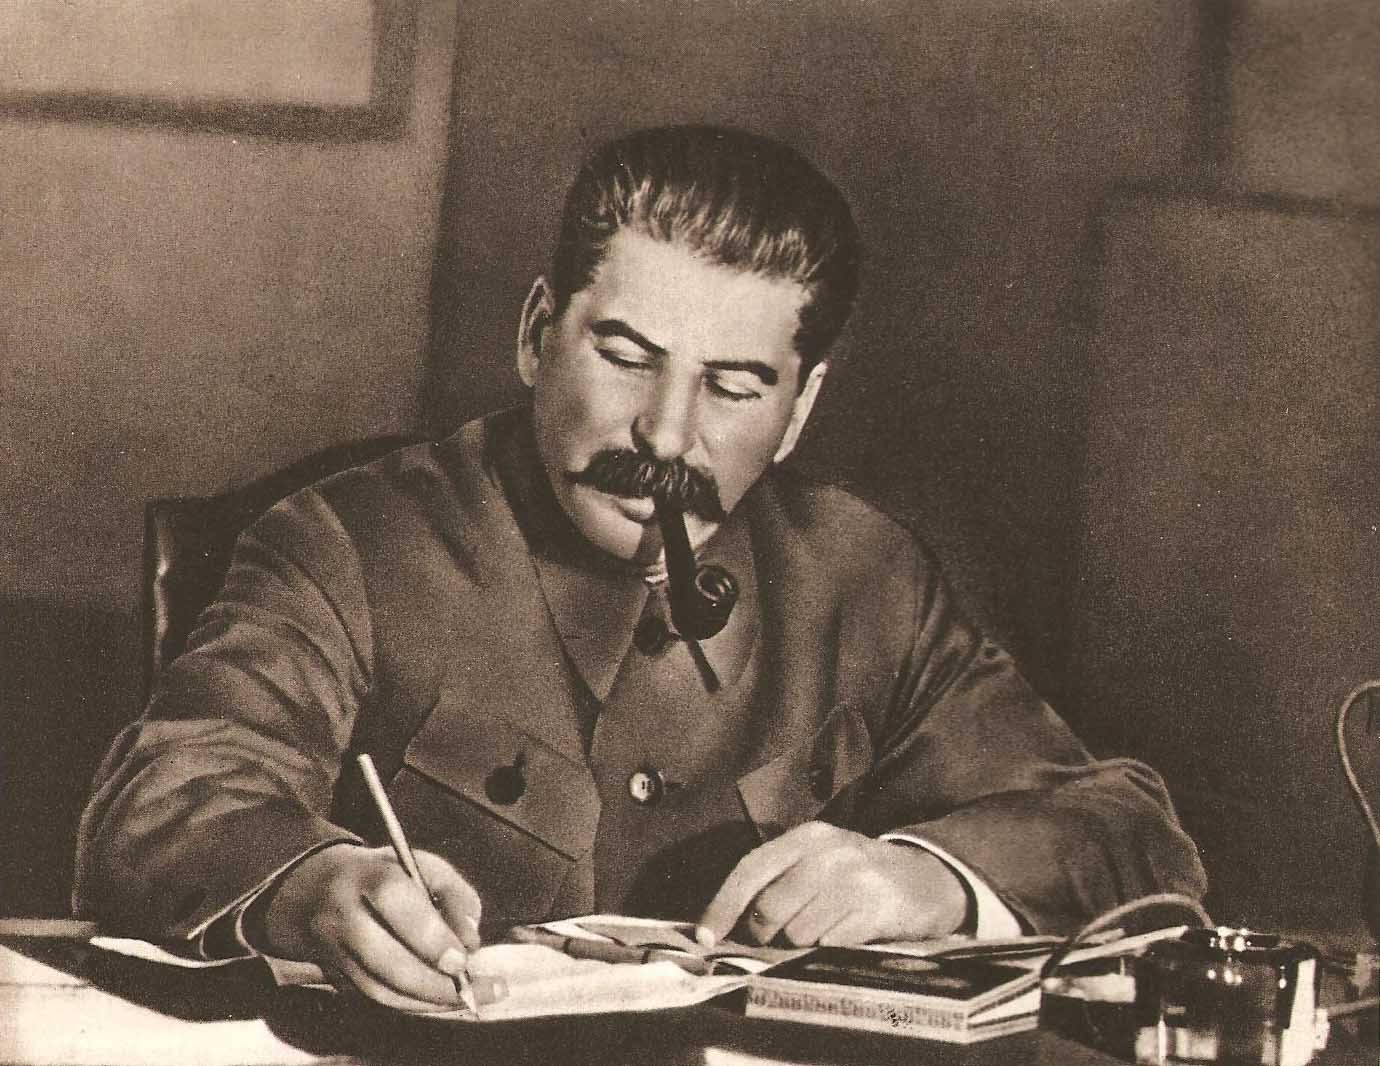 Stalin writing